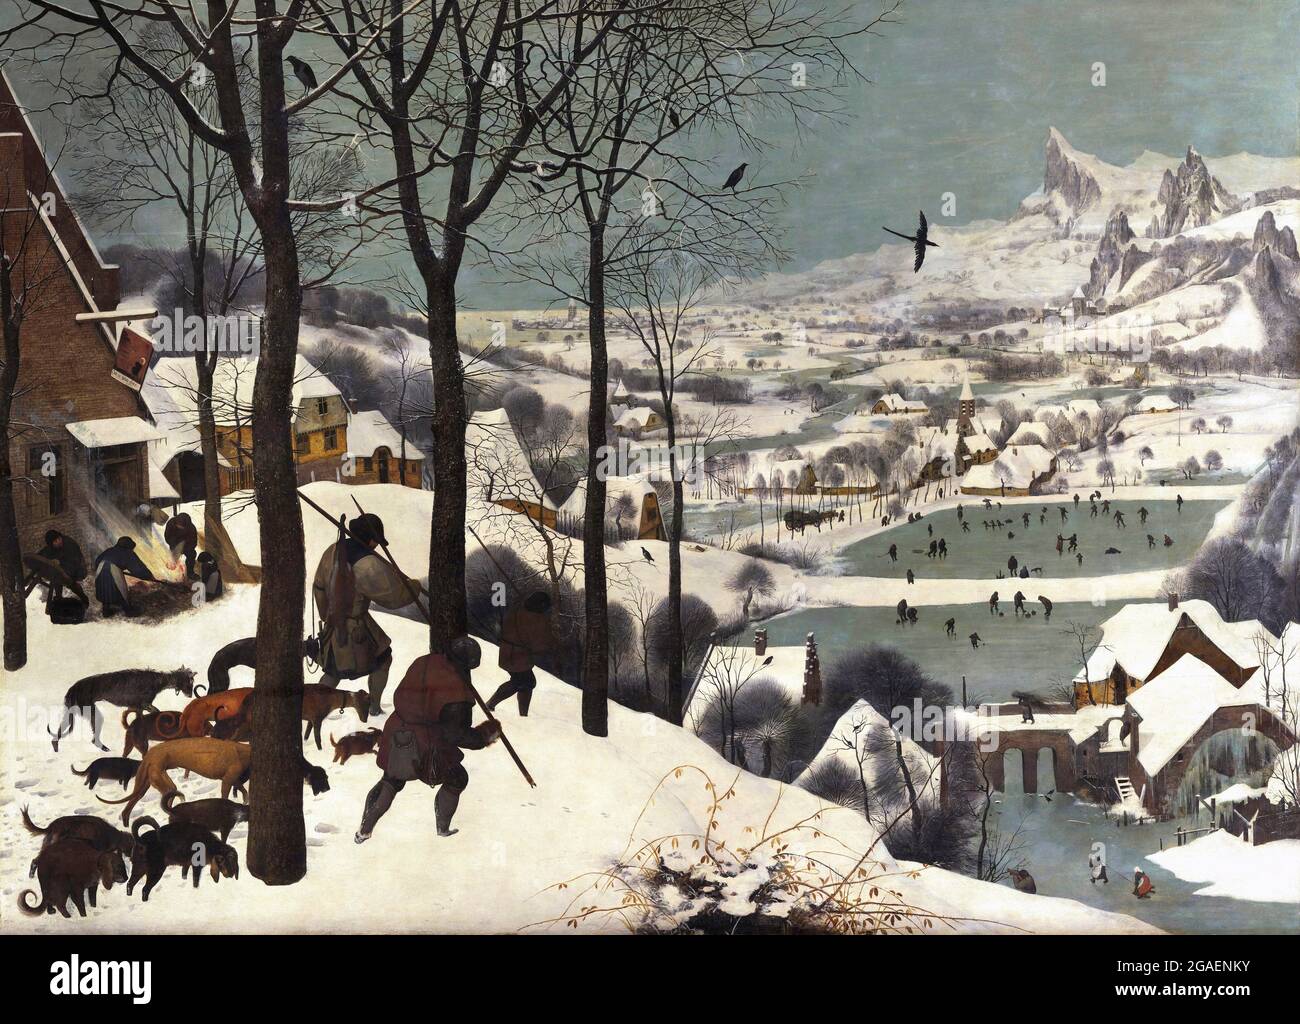 Hunters in the Snow by Pieter Bruegel the Elder, oil on panel, 1565 Stock Photo